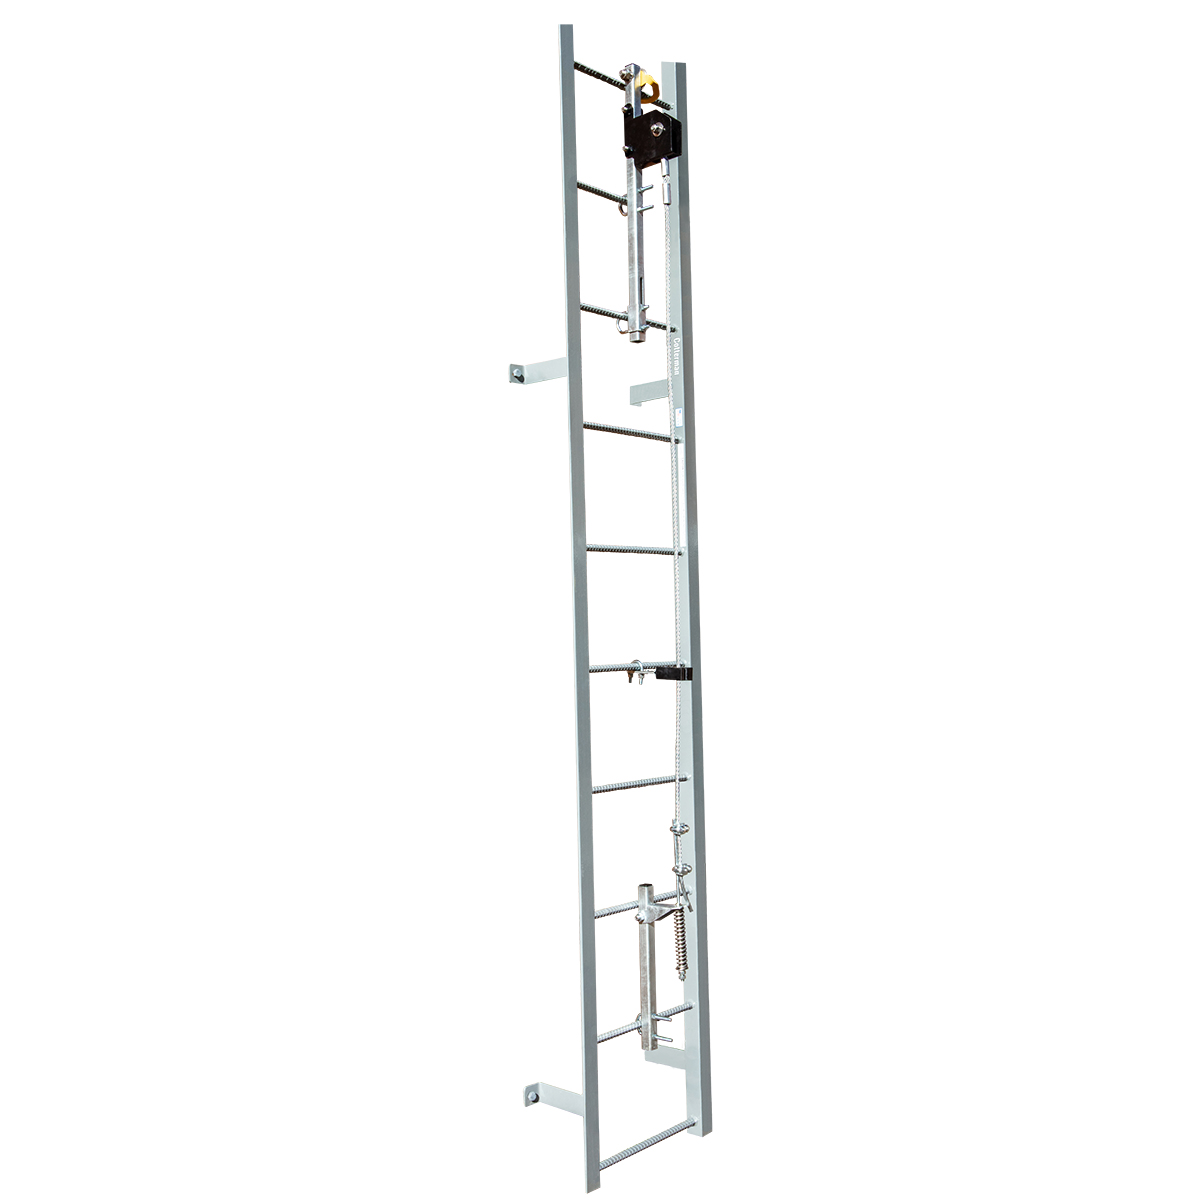 SafeWaze 40' VLL Cable Ladder System, 2-person Complete Kit